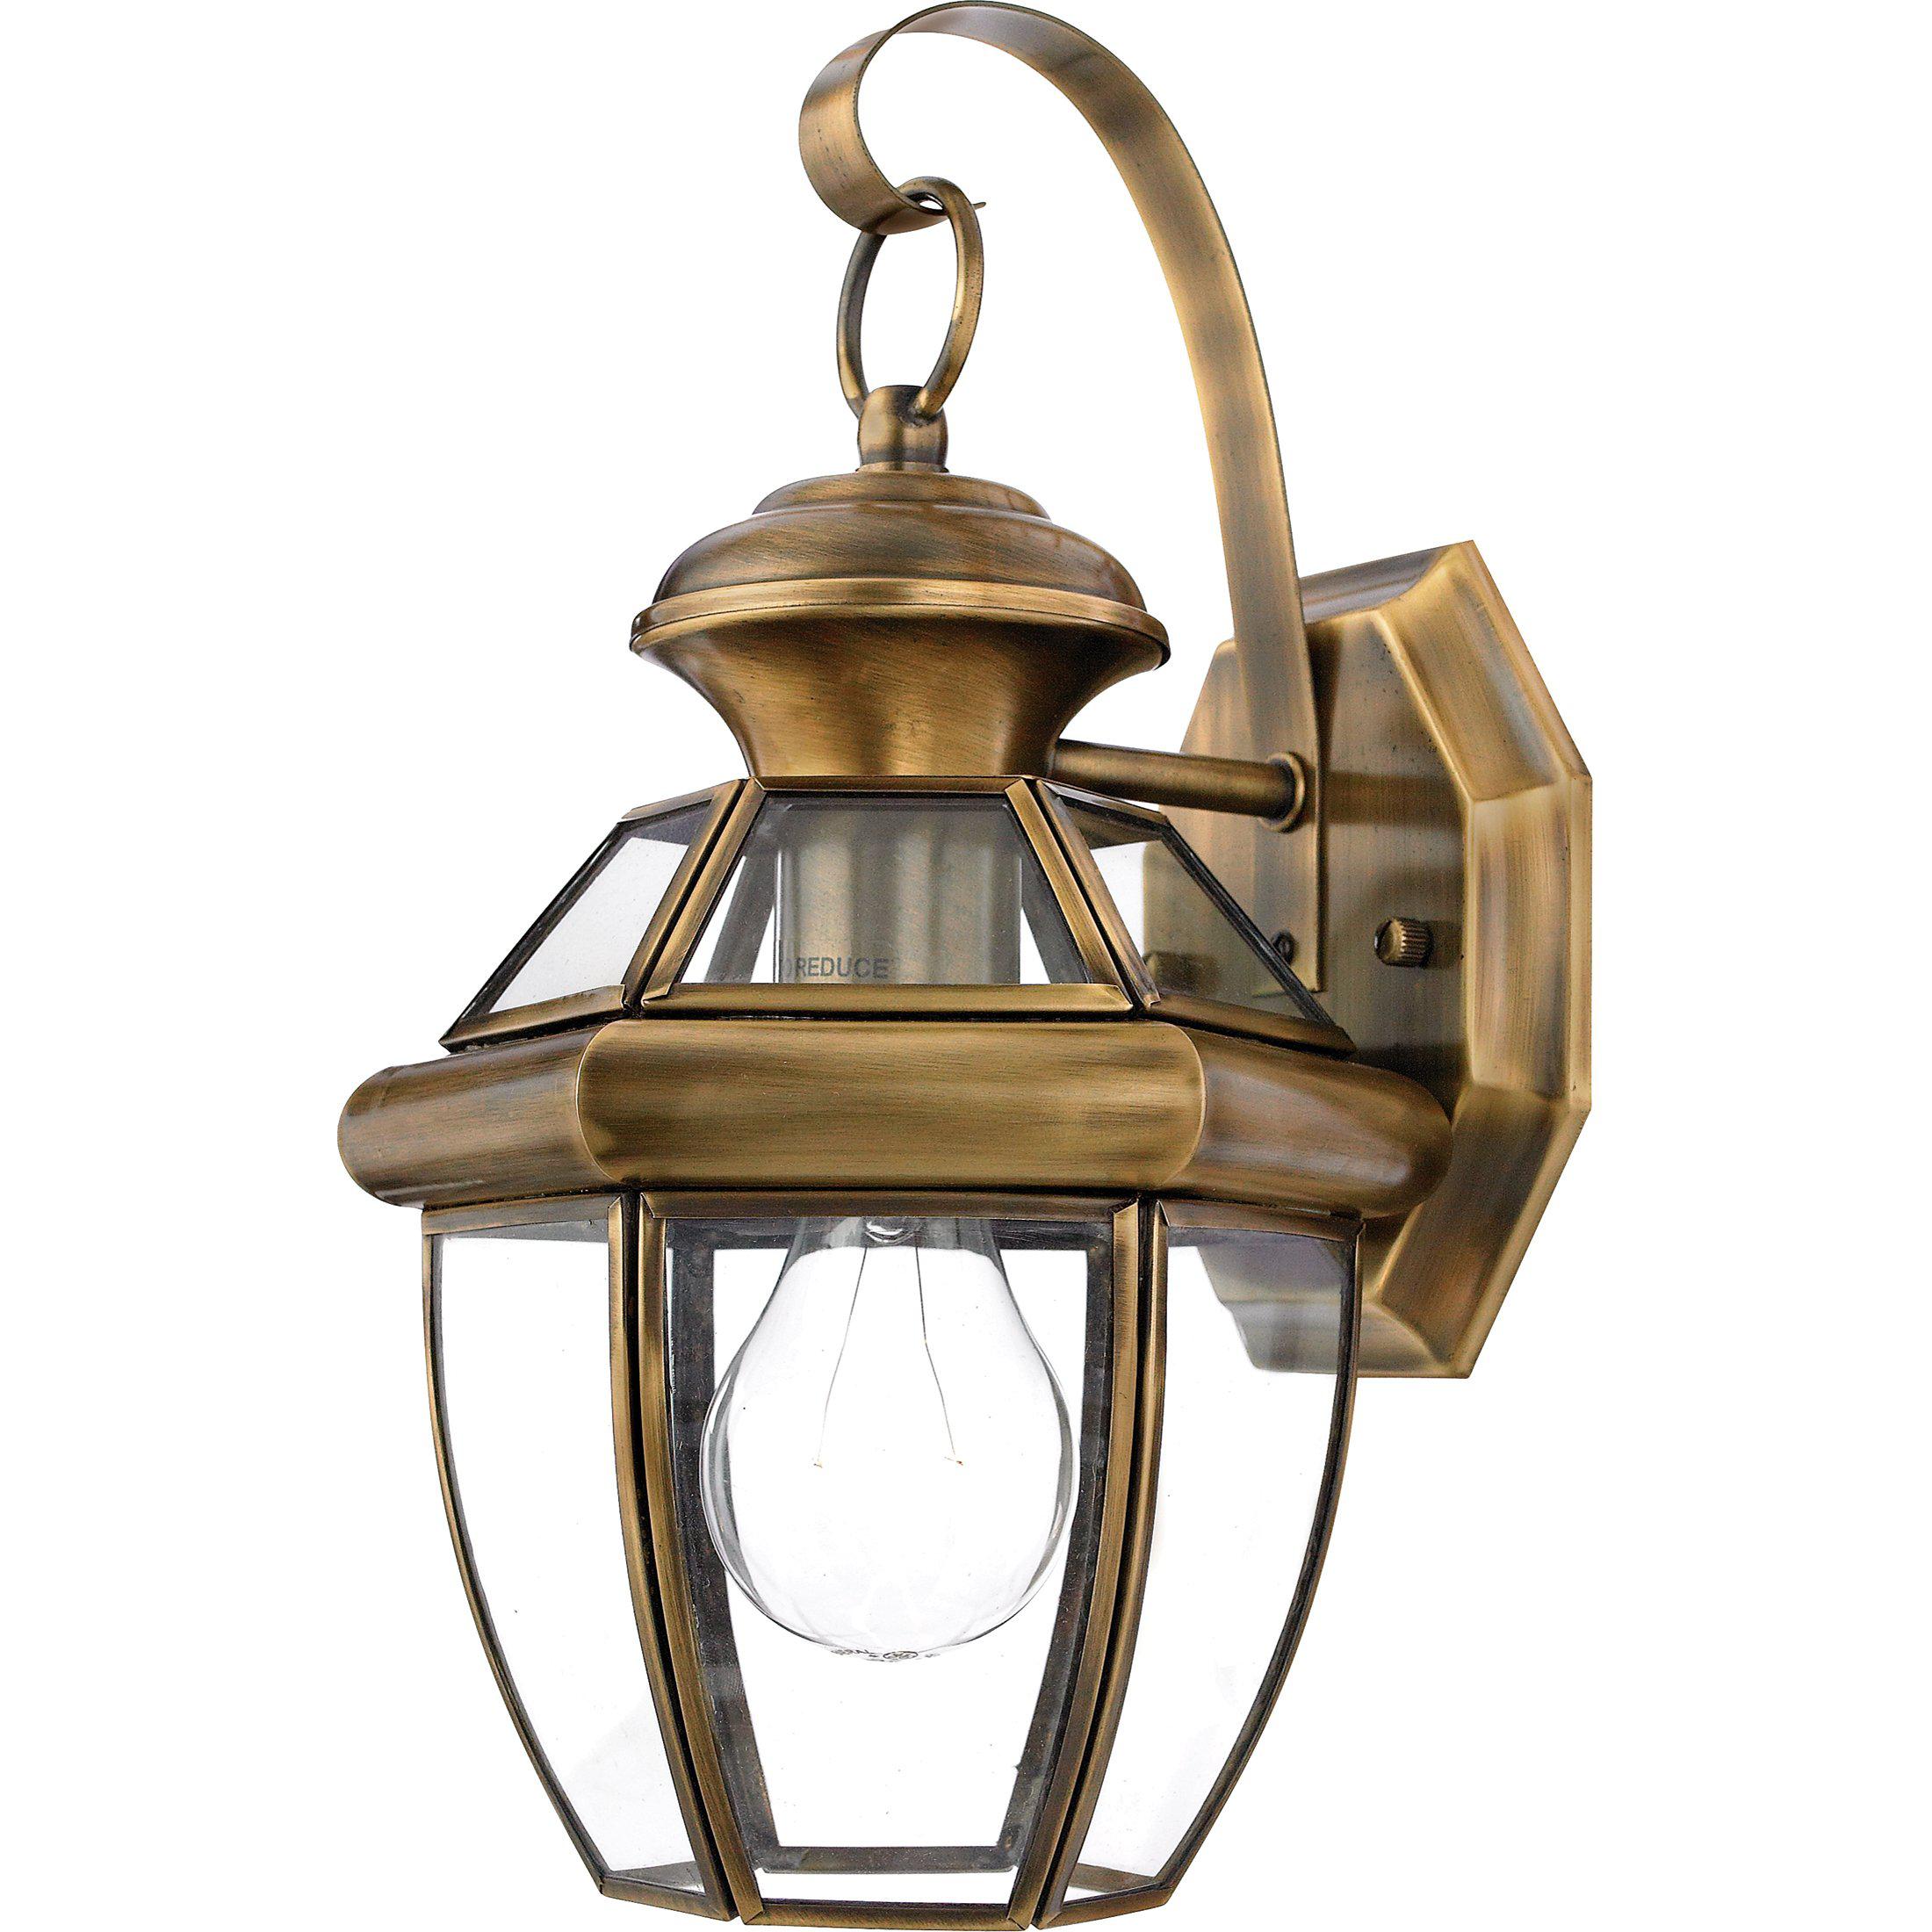 Quoizel Newbury Outdoor Lantern, Small